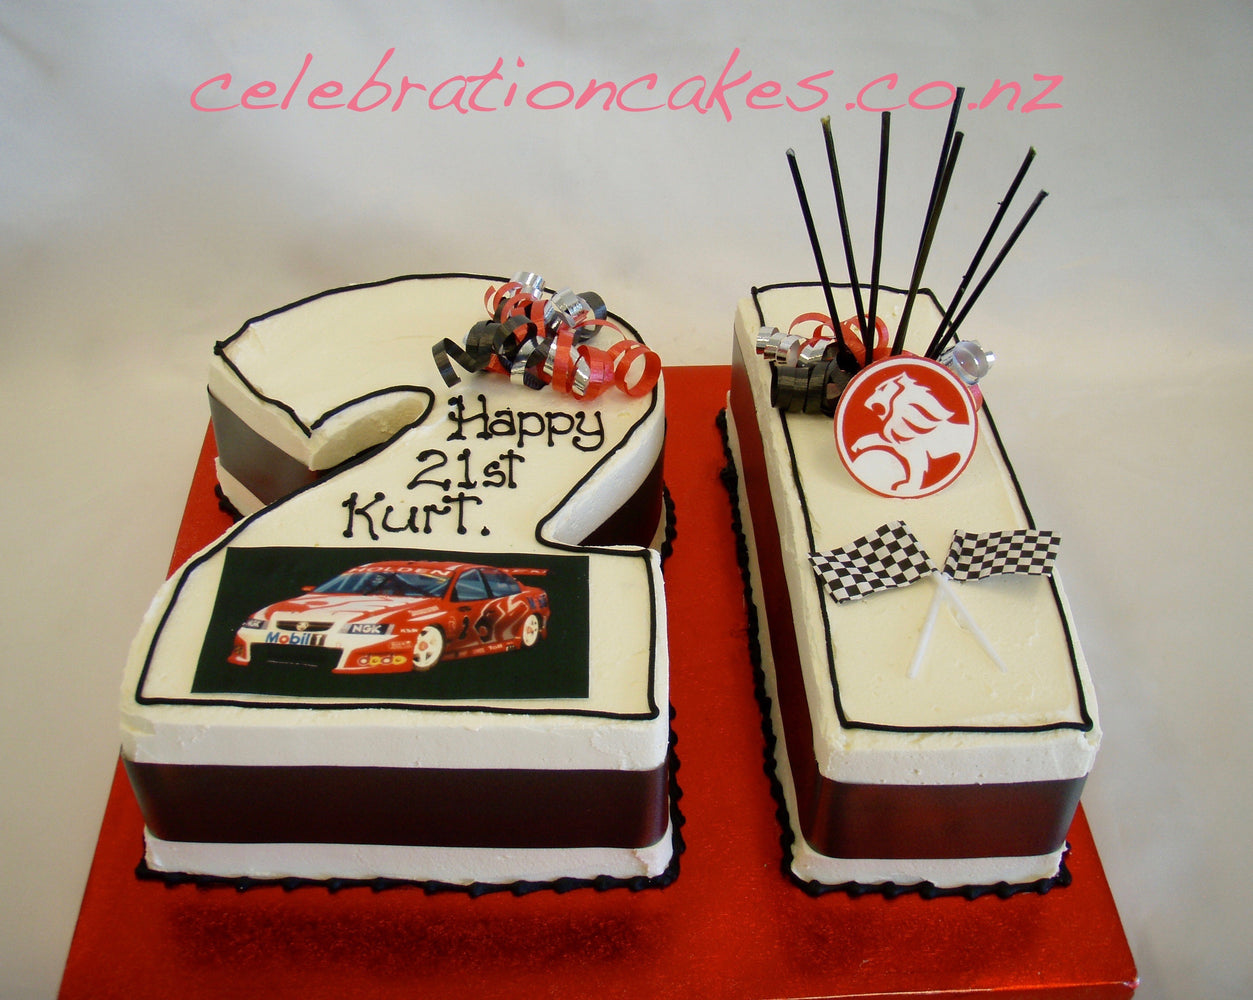 21st Birthday Cakes Auckland Nz Celebration Cakes